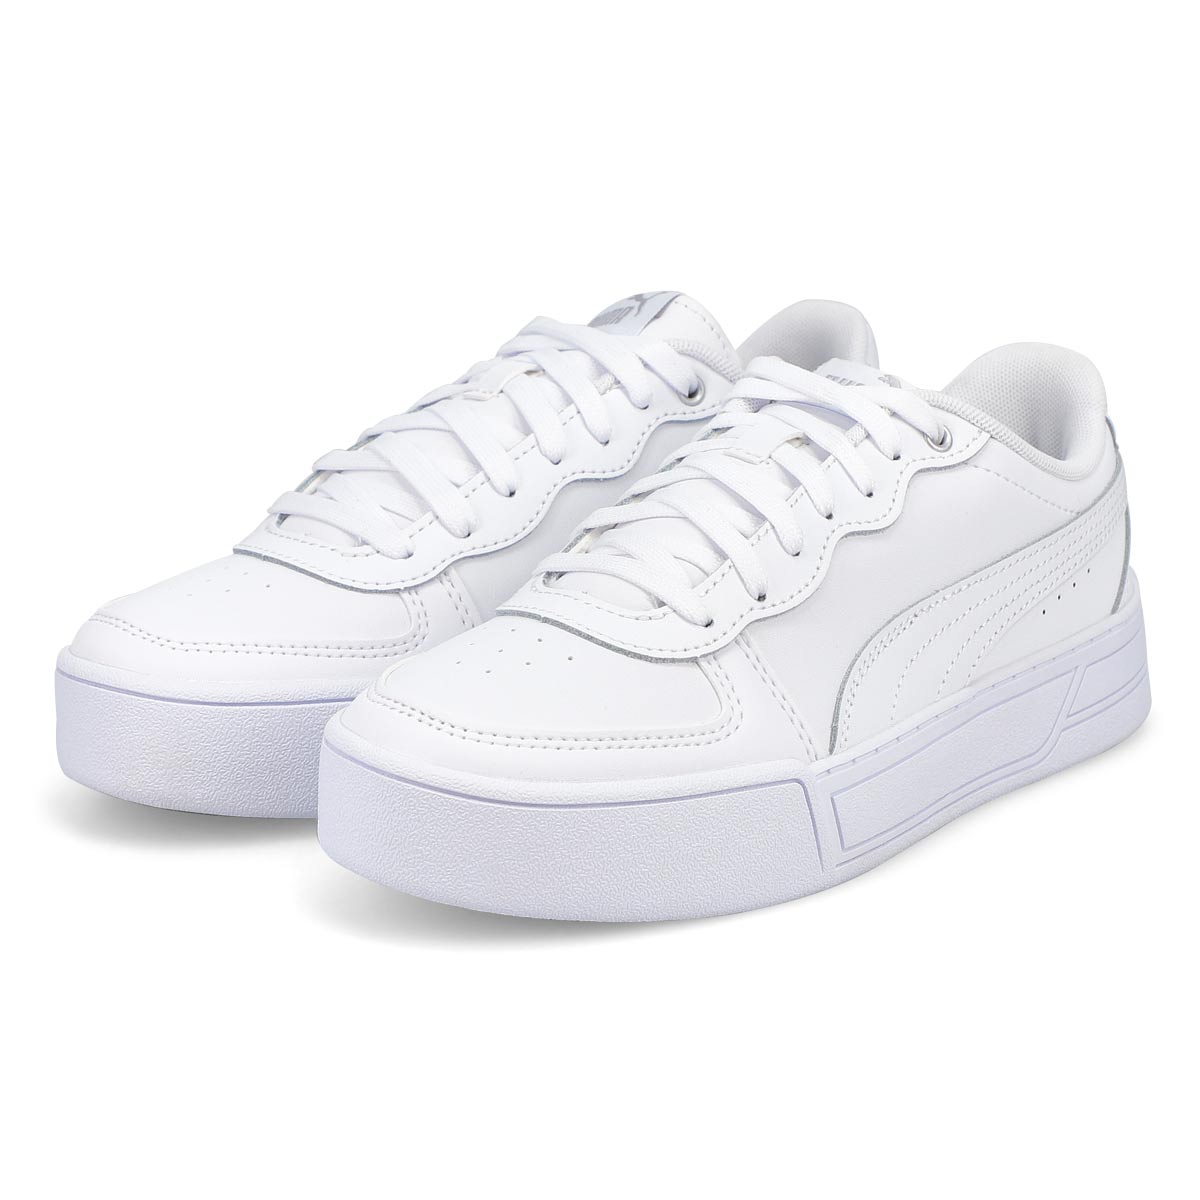 Women's Puma Skye Sneaker - White/White